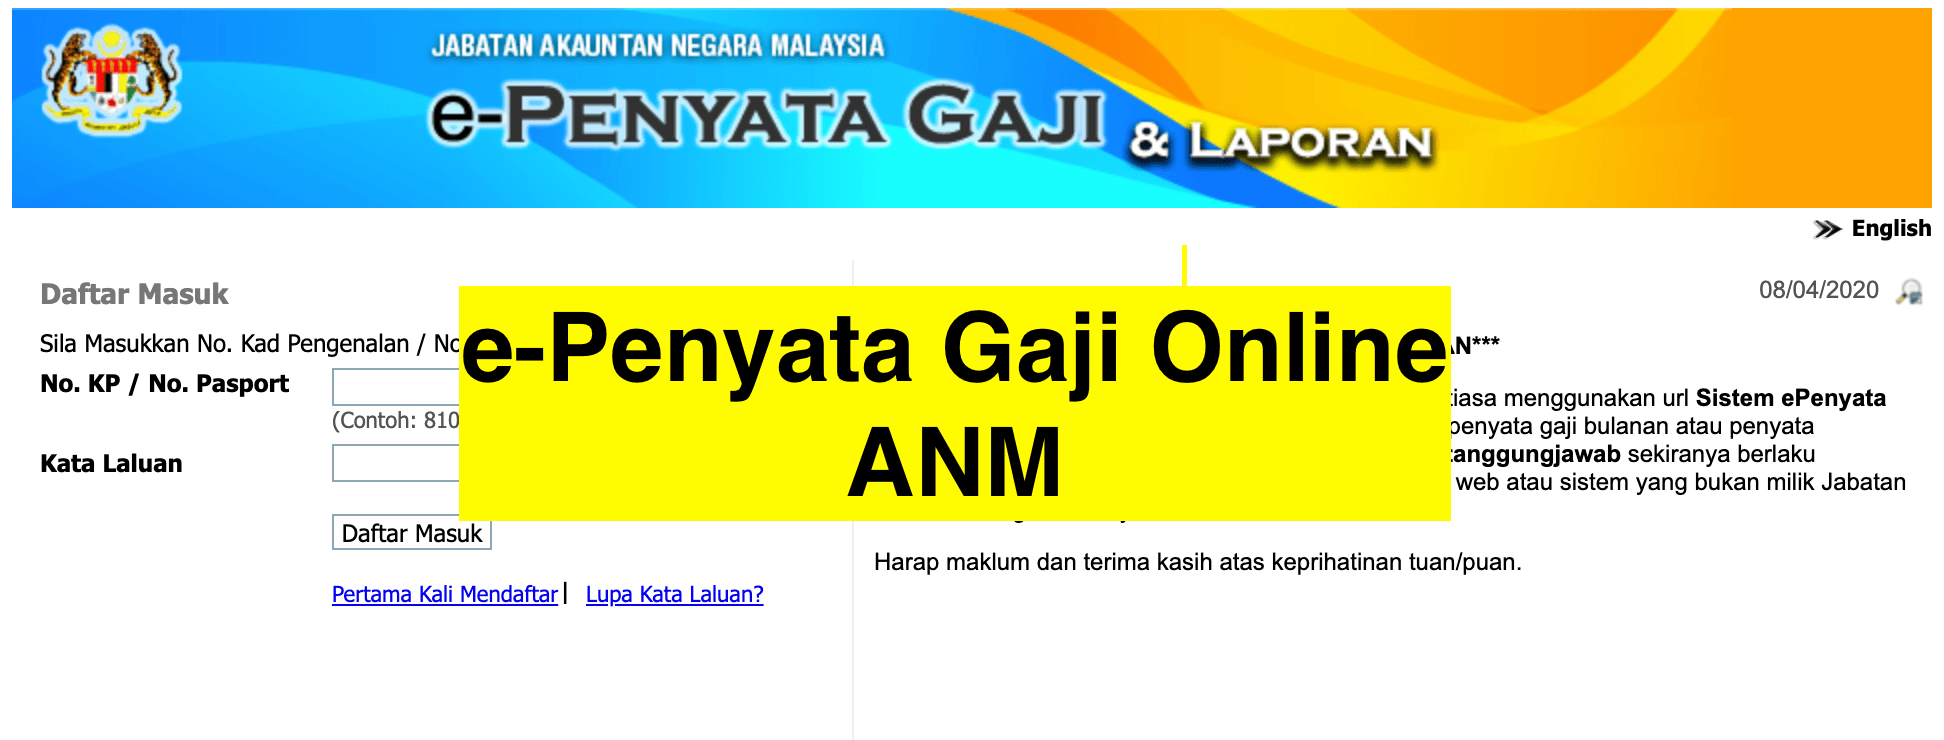 Www.anm.gov.my e-penyata gaji online